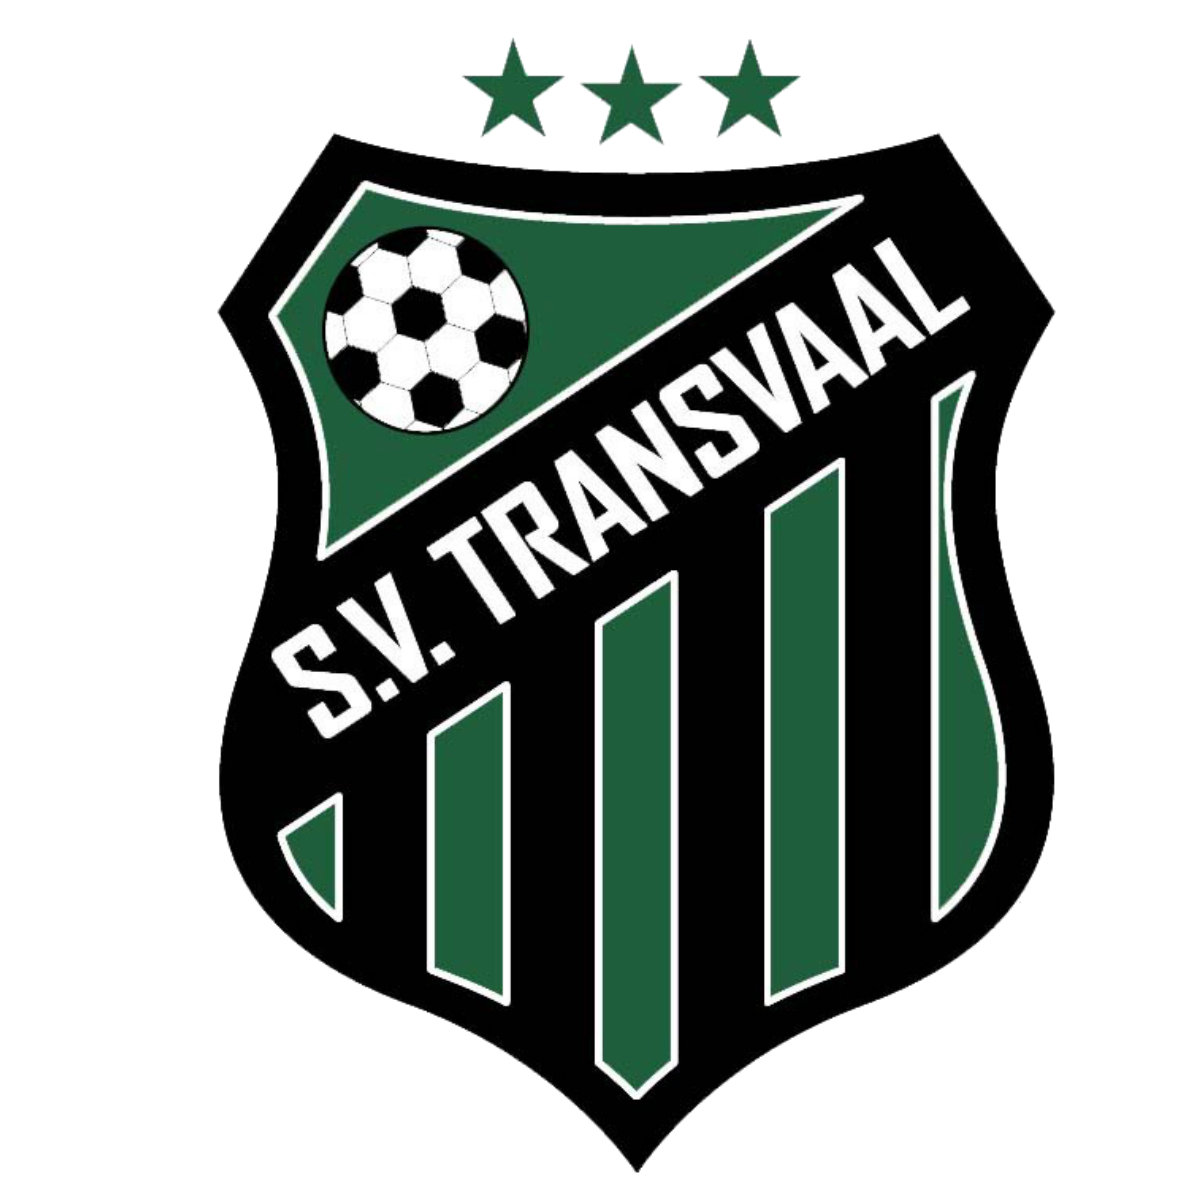 Transvaal logo